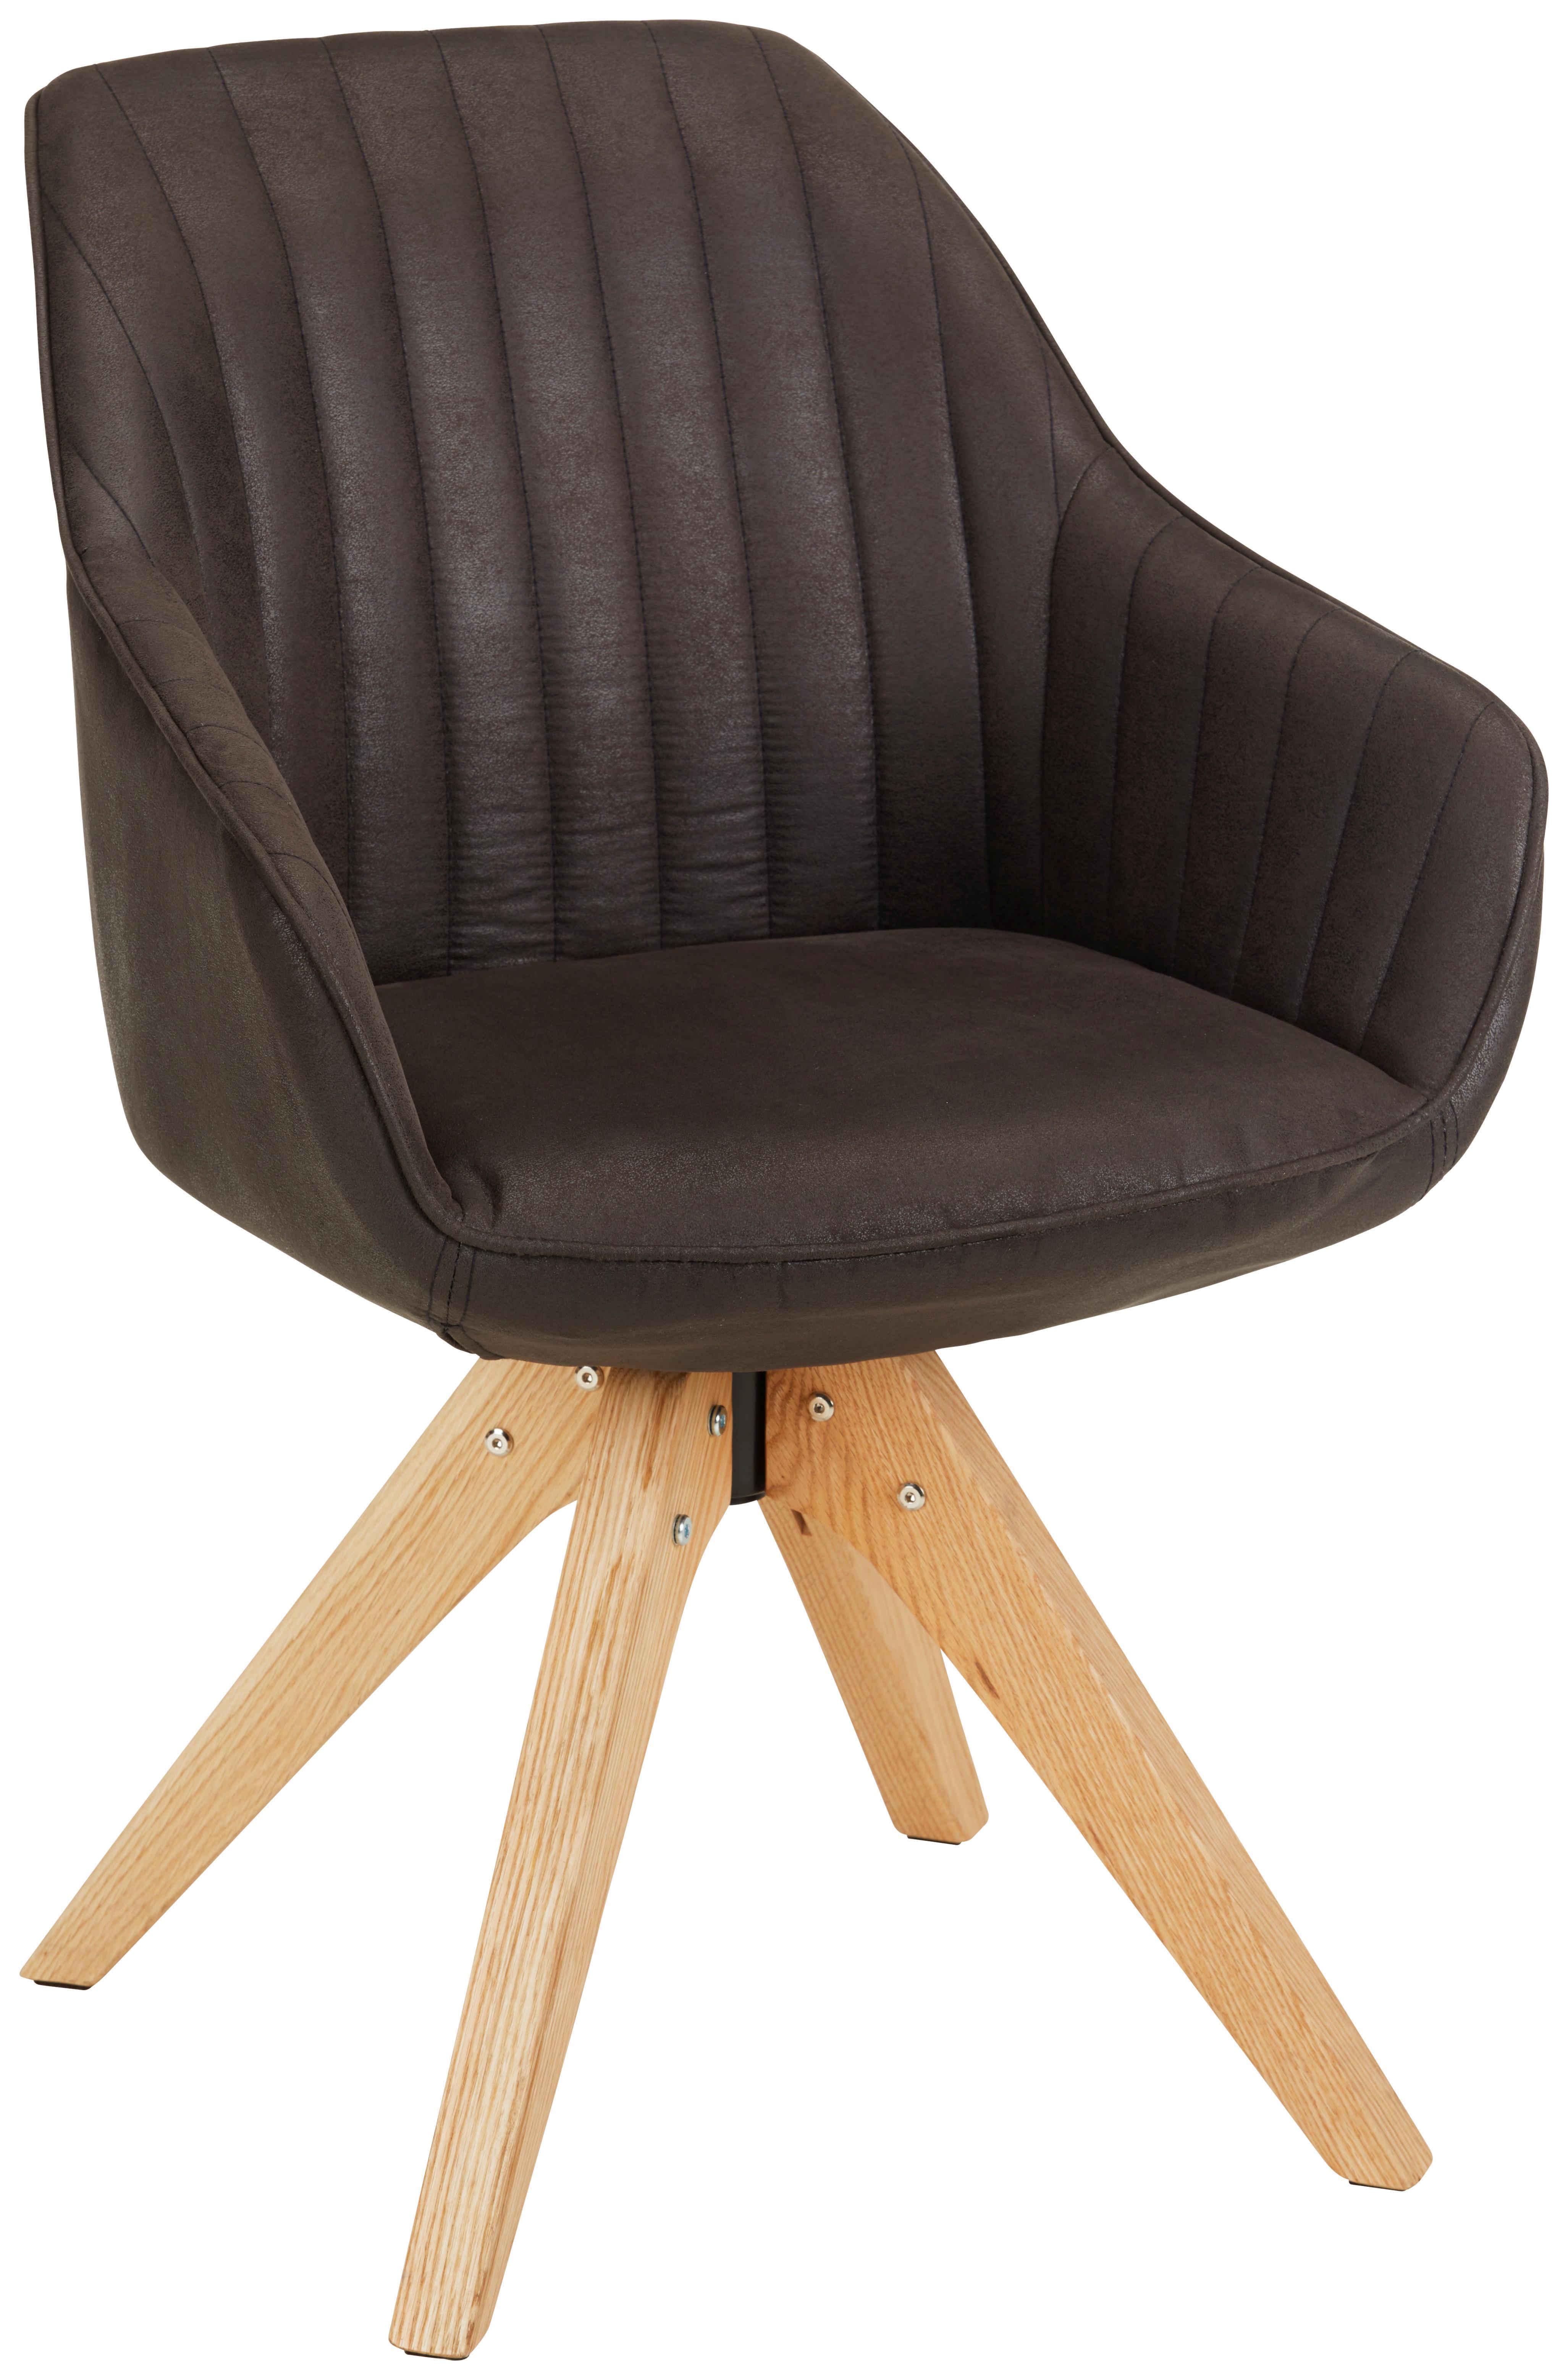 Židle S Područkami Chill - barvy dubu/tmavě šedá, dřevo/textil (60/83/65cm) - Premium Living